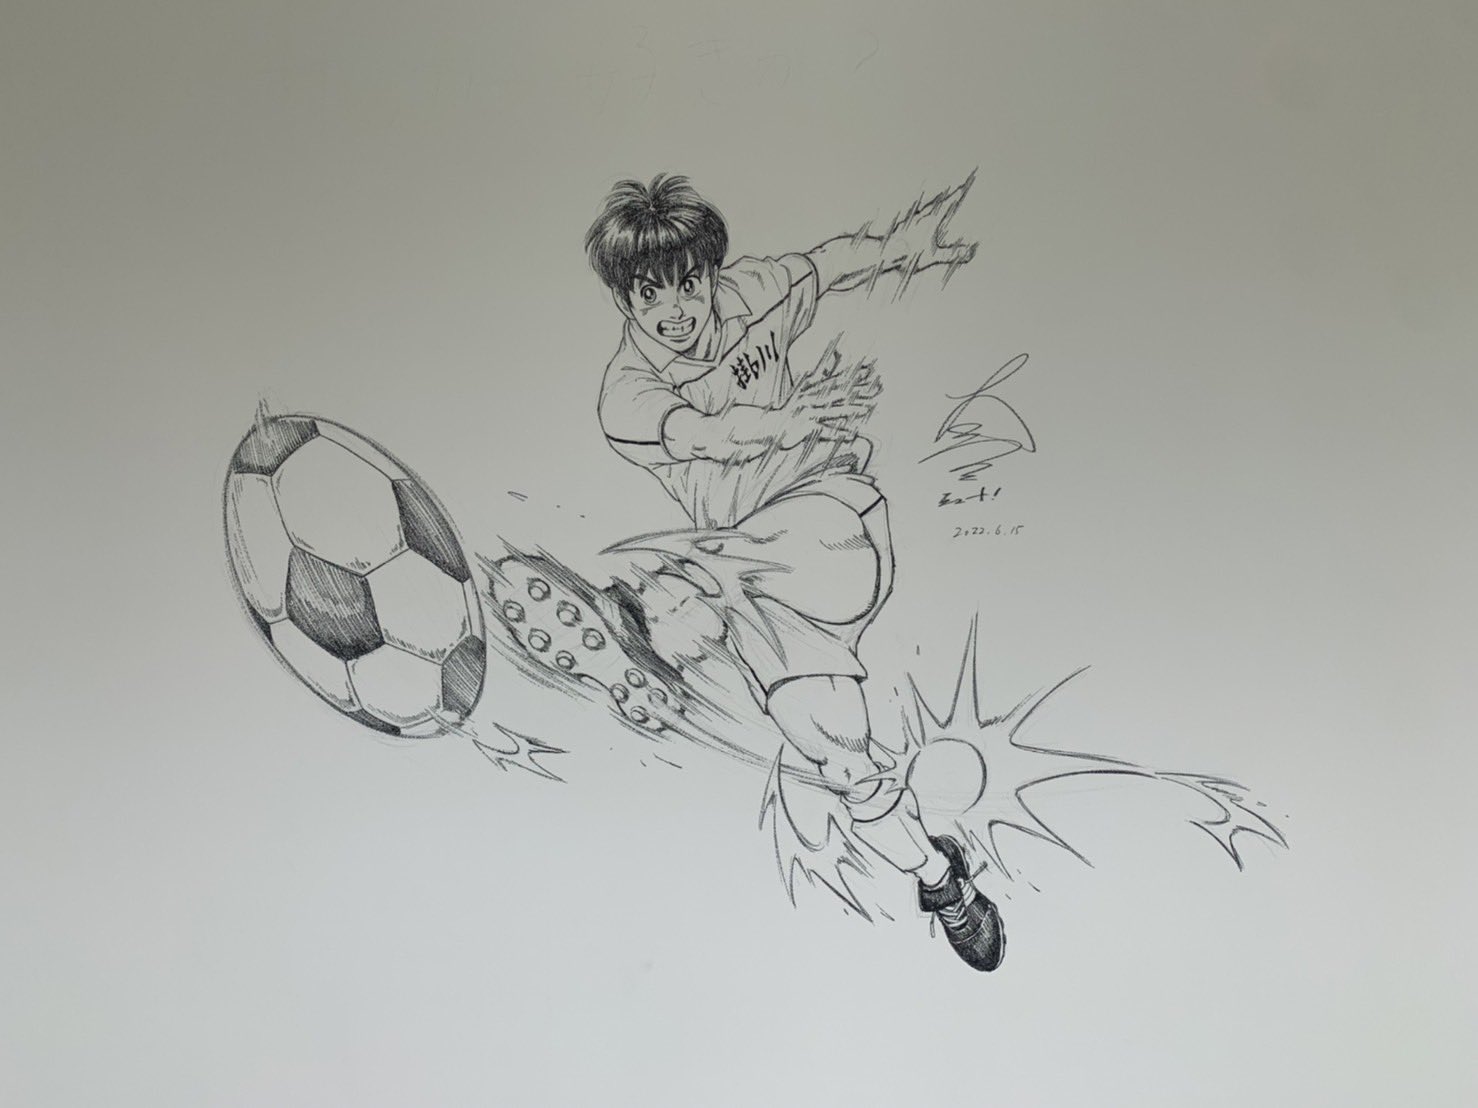 Shinji Okazaki サッカー漫画 シュート の作者の大島司先生に 幻の左 を新しいグラウンドのある場所に書いて頂きました 実物はさらに迫力があり 田中俊彦の何がなんでもゴール獲る気持ちを子供達に持って欲しい 大島司先生ありがとうございました